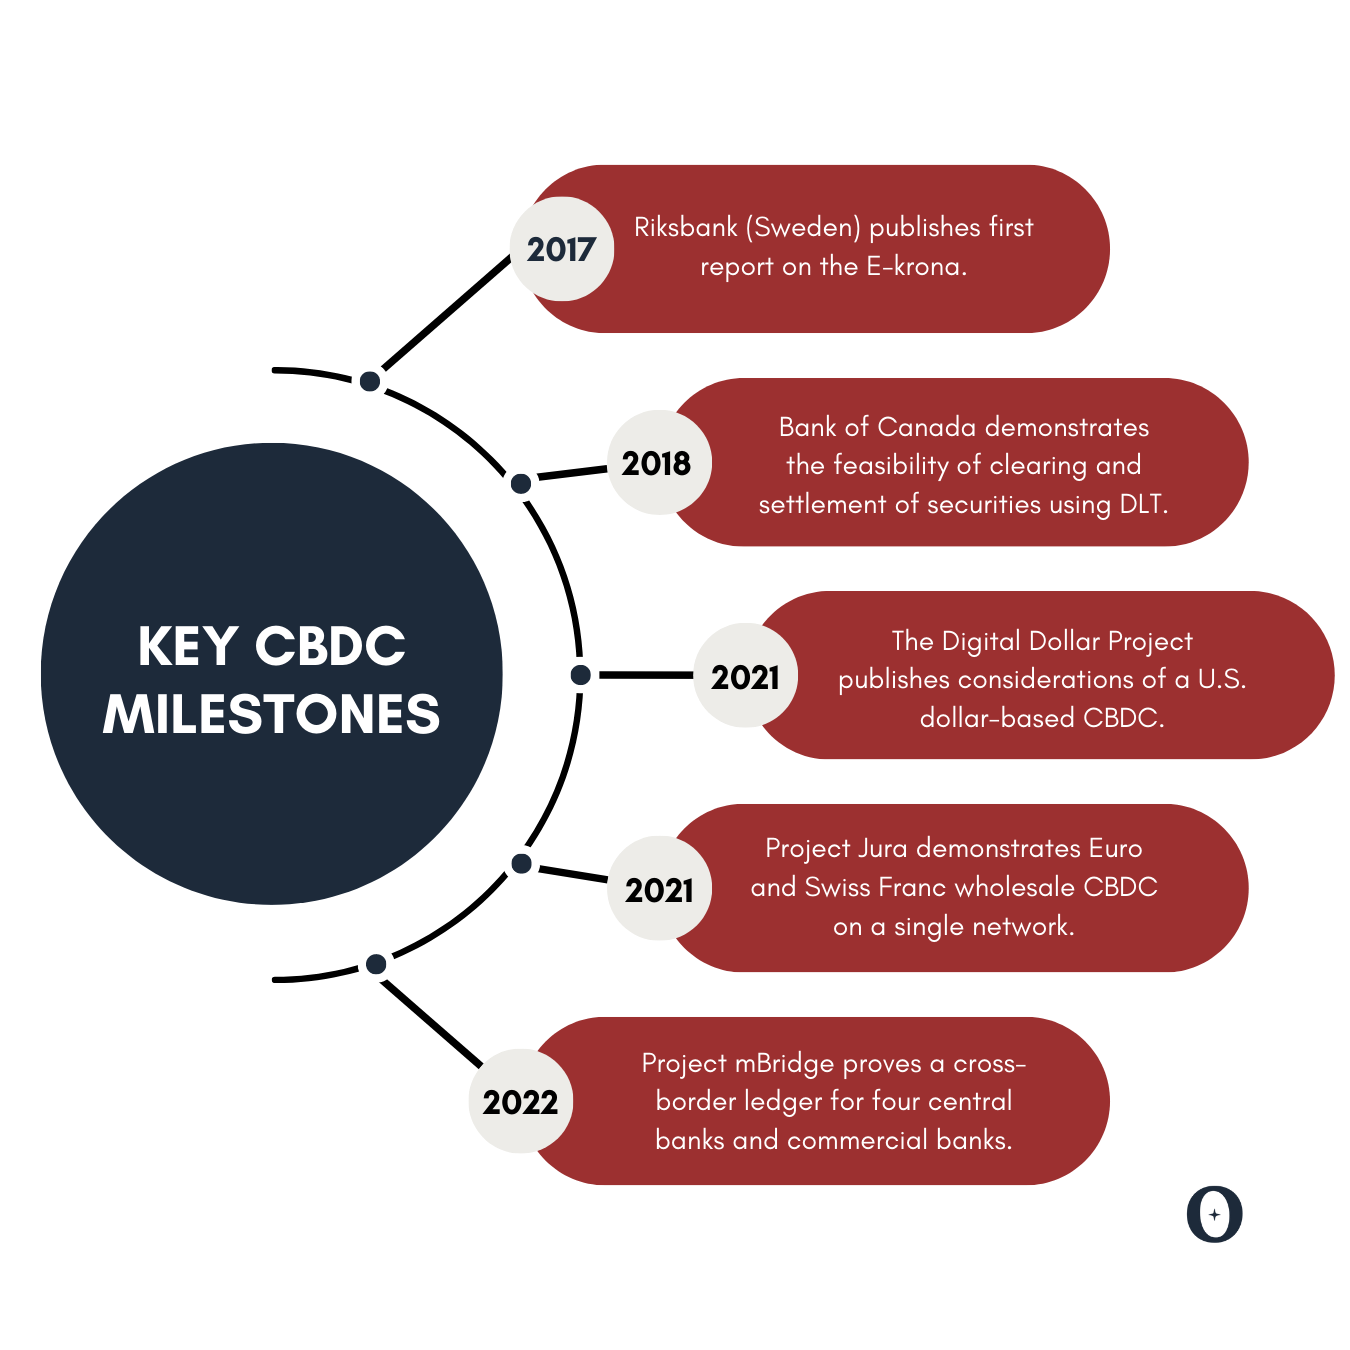 A timline of CBDC developments 2017-2022.